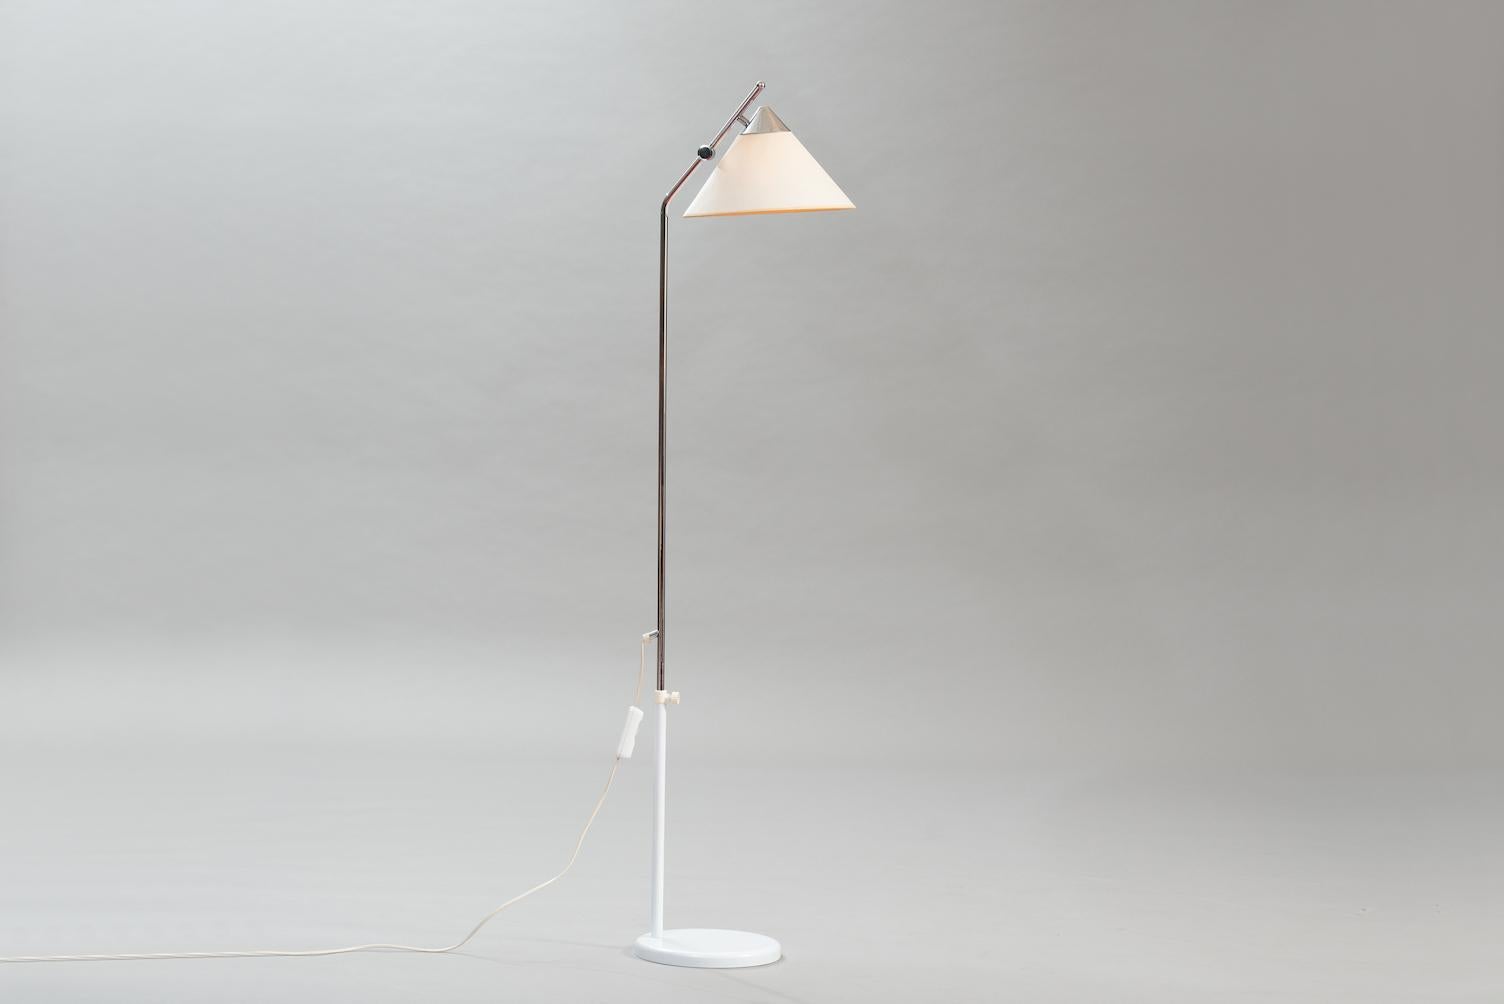 Mid-Century Modern adjustable chrome and white lacquered floor lamp.
Diam. 29 cm (shade), H 160 cm, D 33 cm.